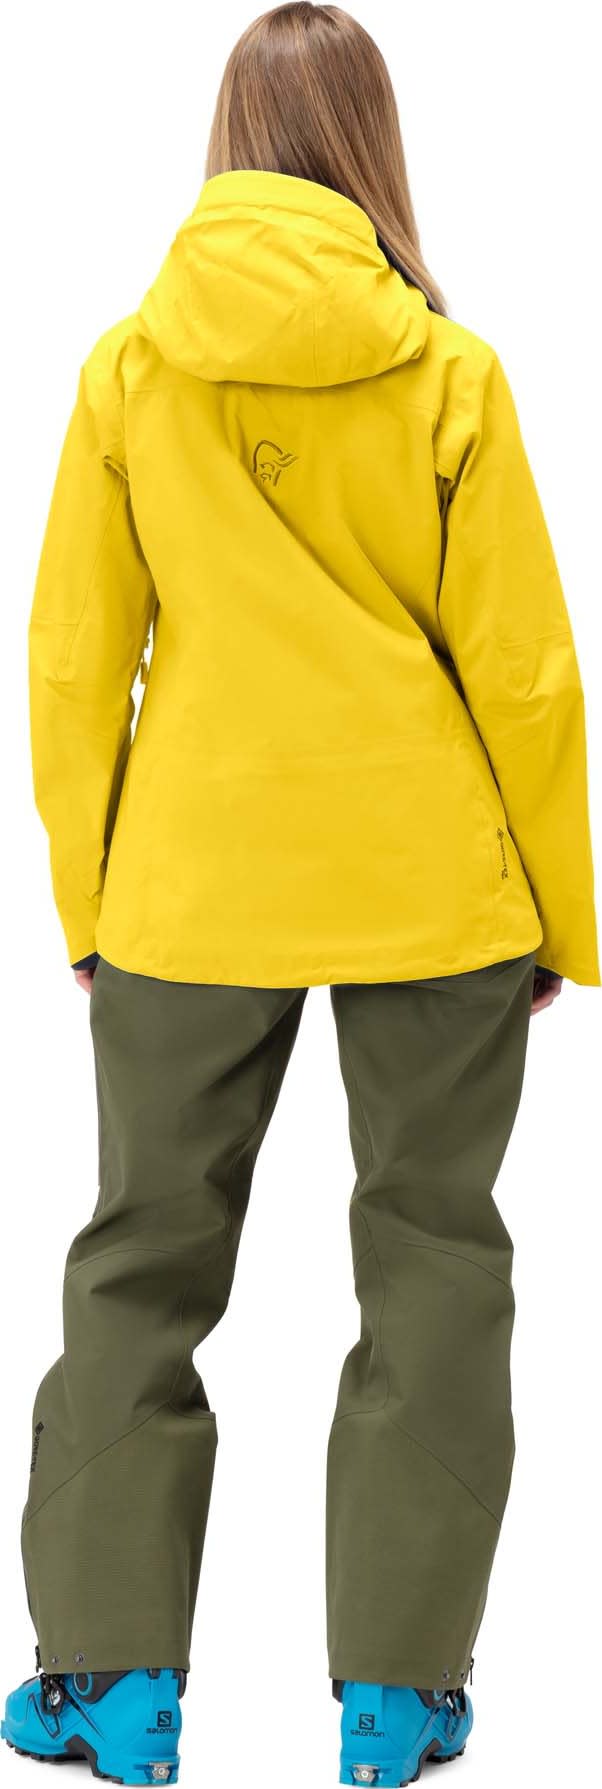 Women's Lofoten GORE-TEX Pro Jacket Blazing Yellow Norrøna